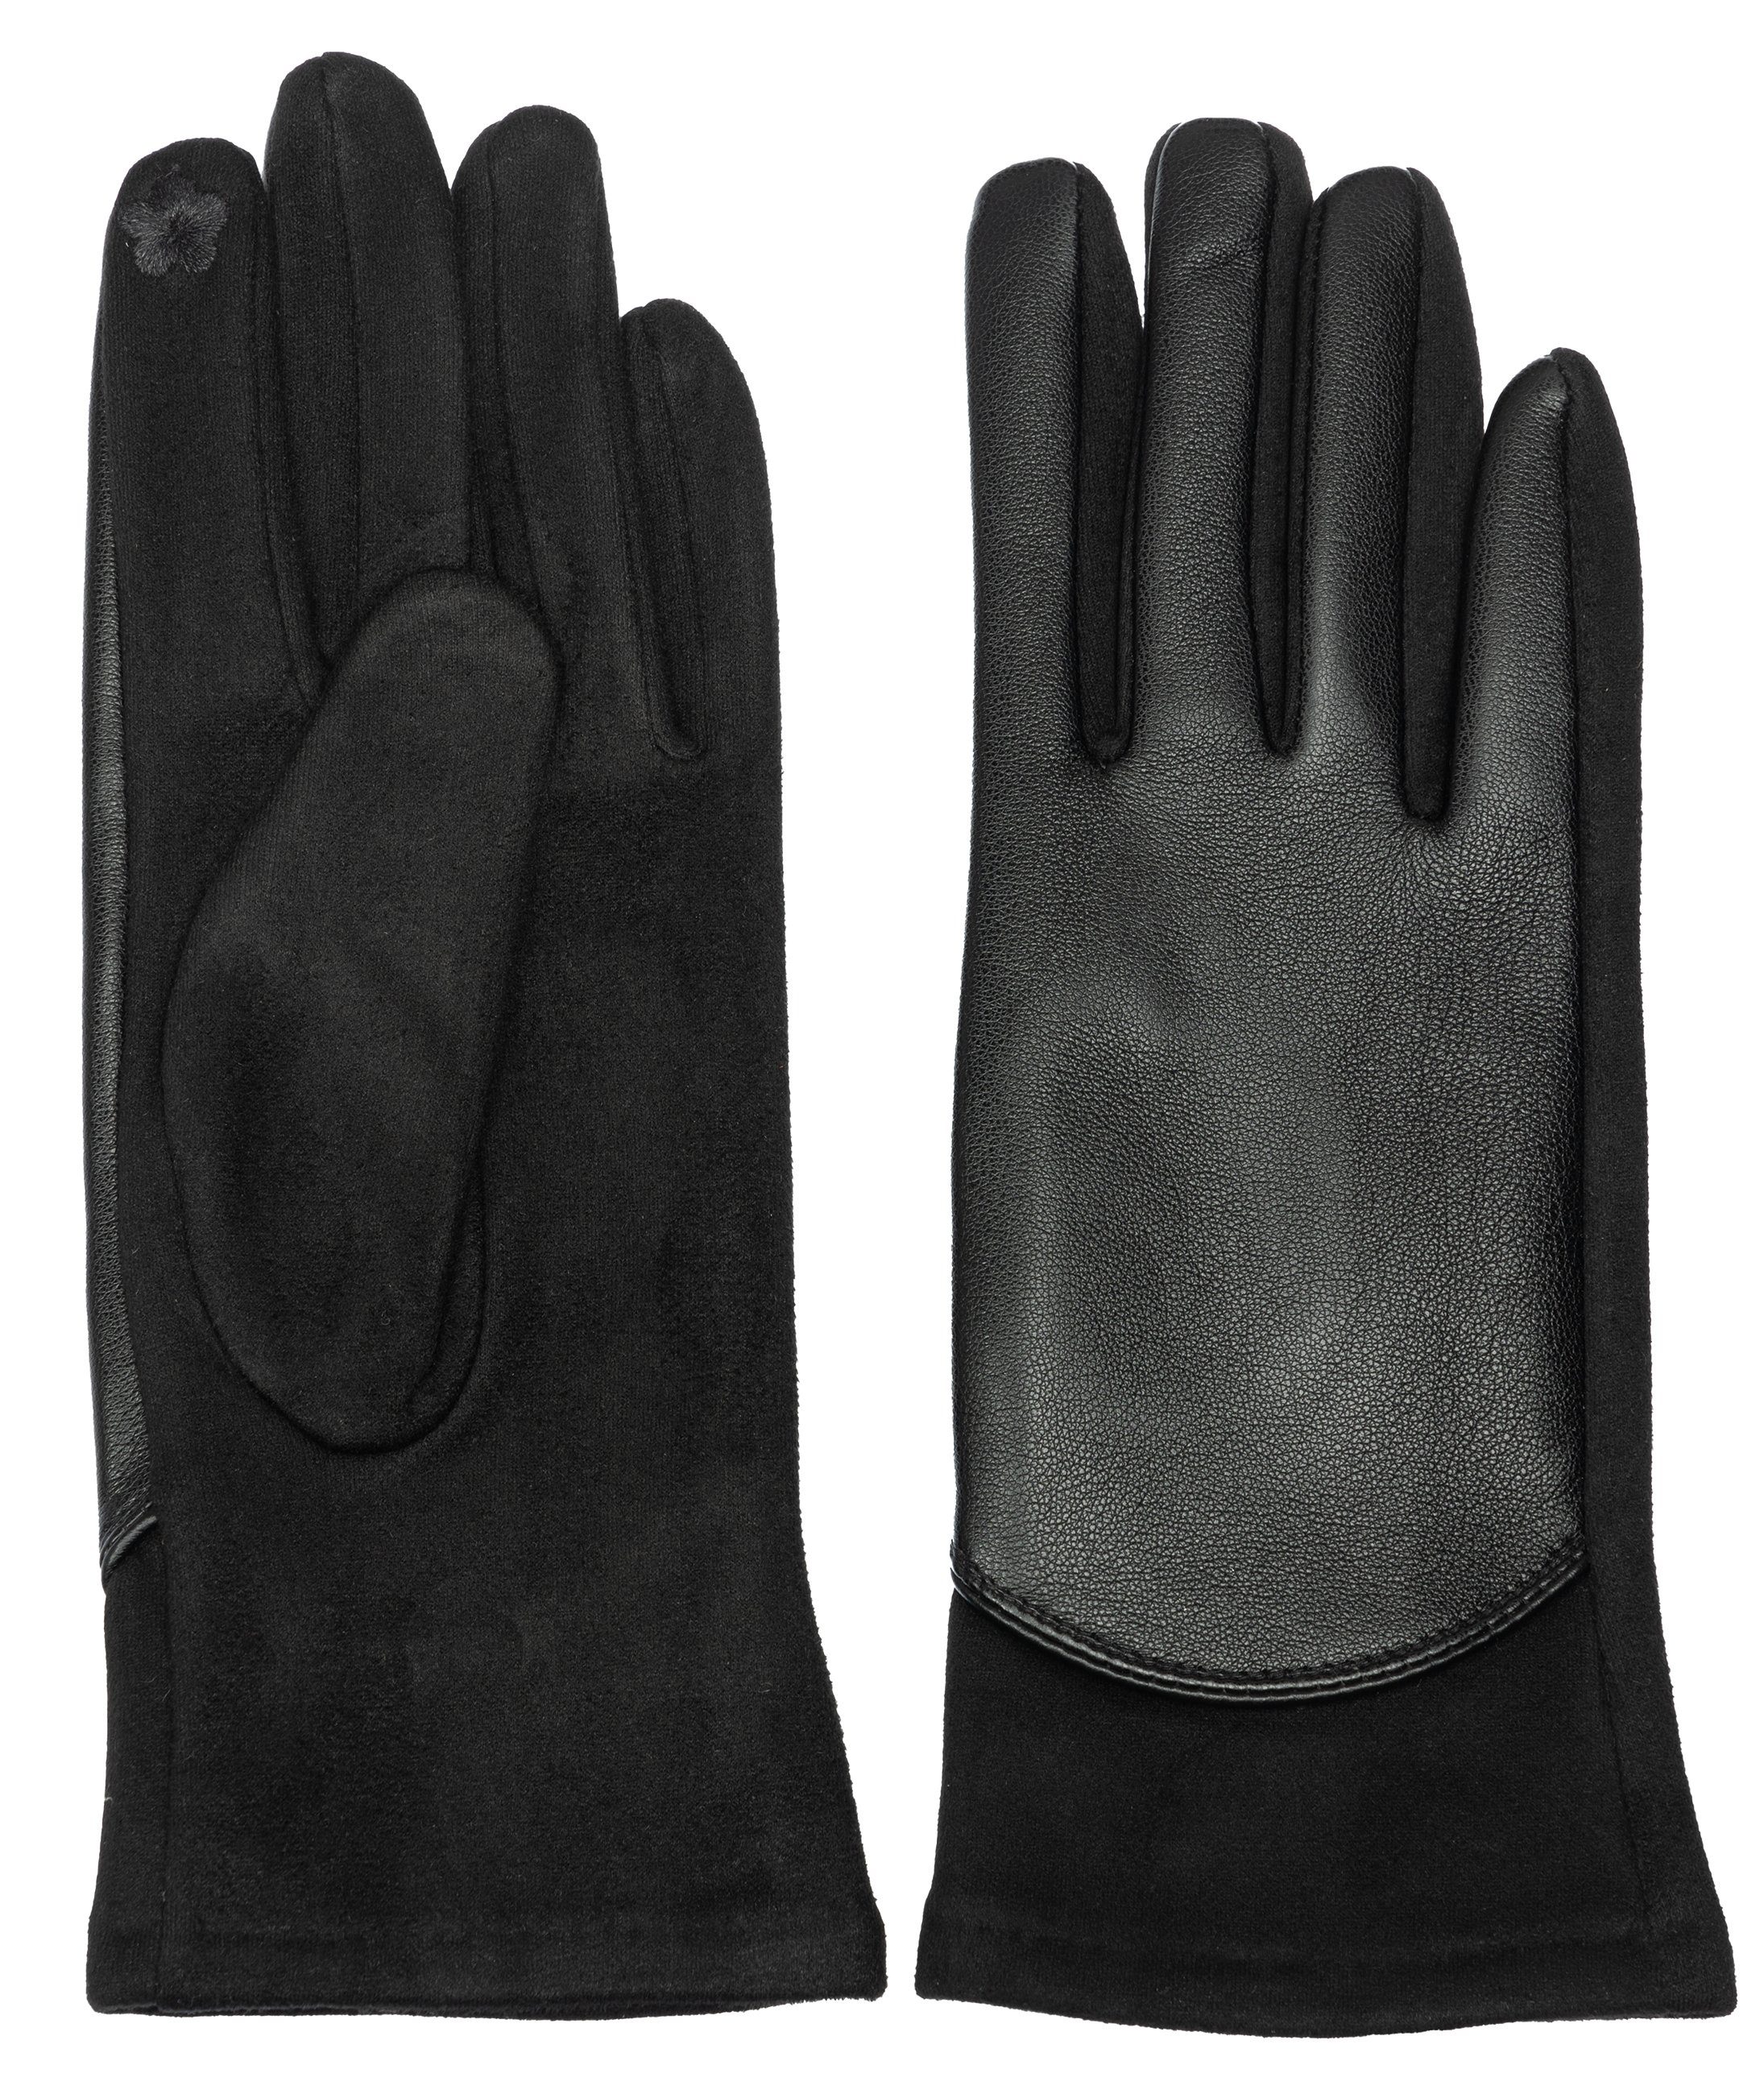 Caspar Strickhandschuhe GLV016 klassisch elegante uni Damen Handschuhe schwarz